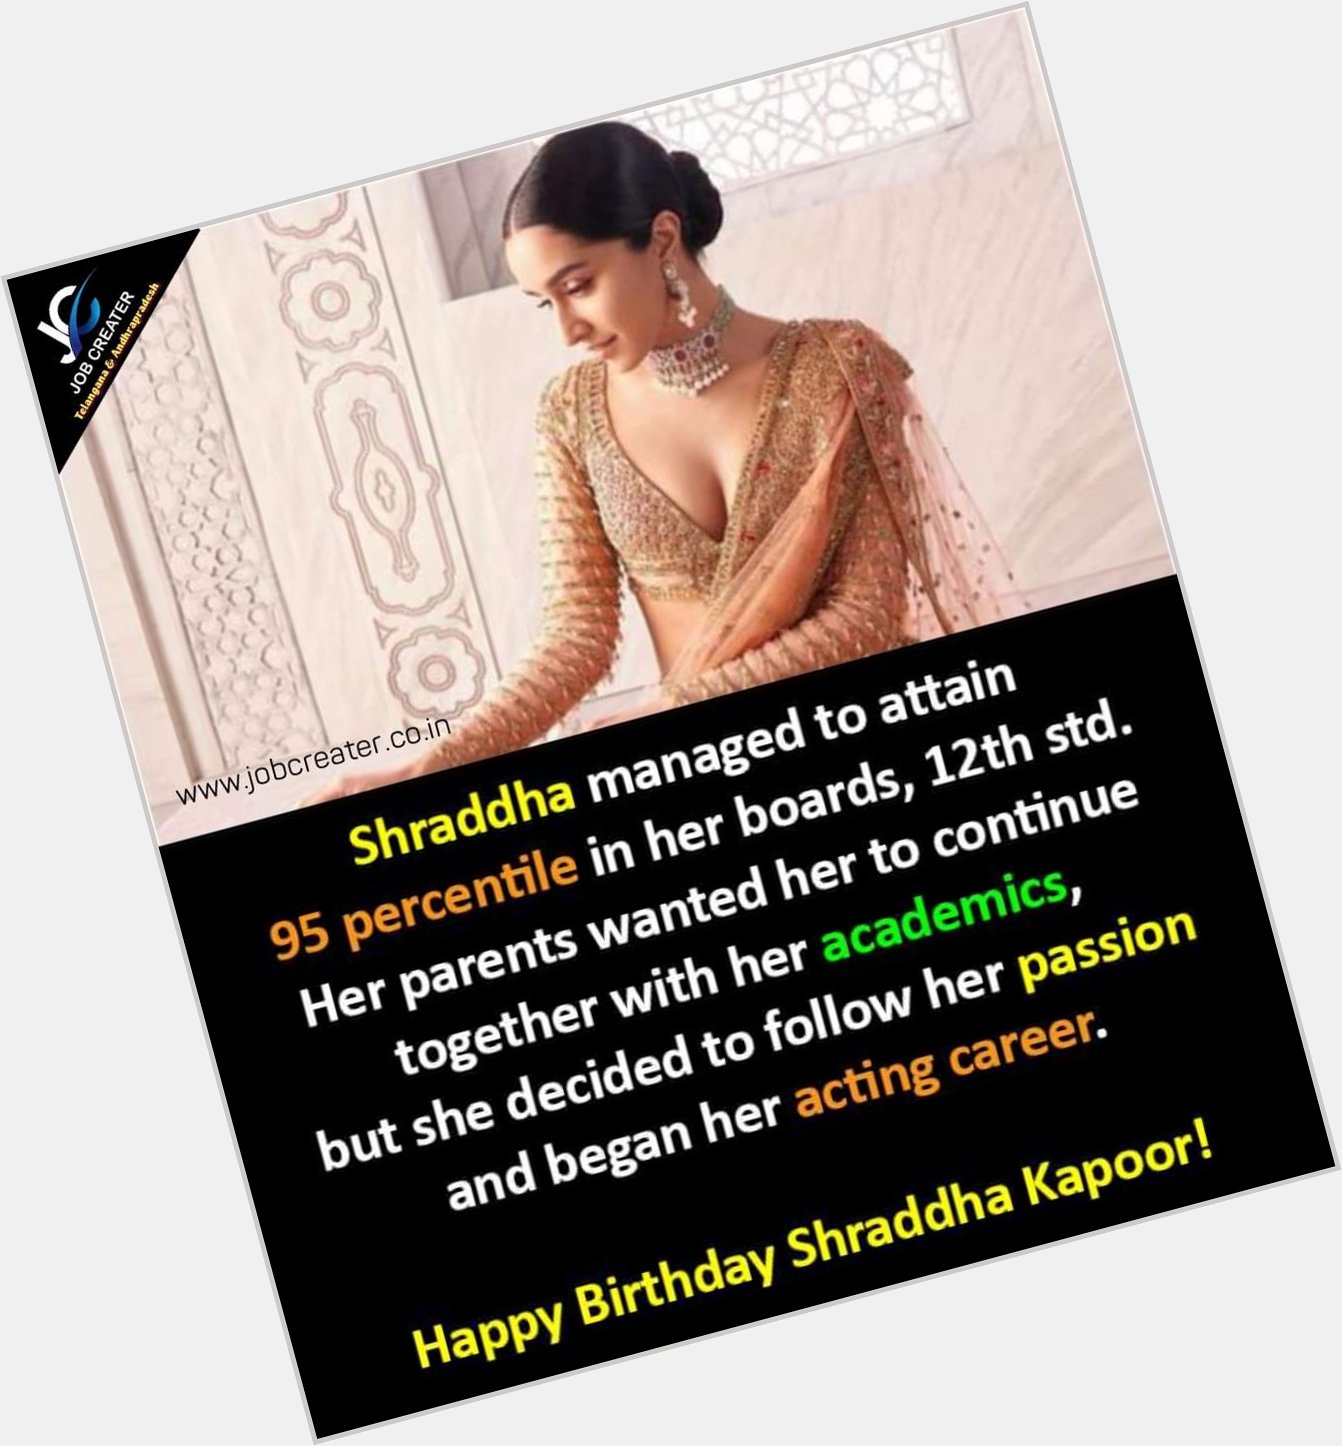 Happy birthday Shraddha Kapoor 